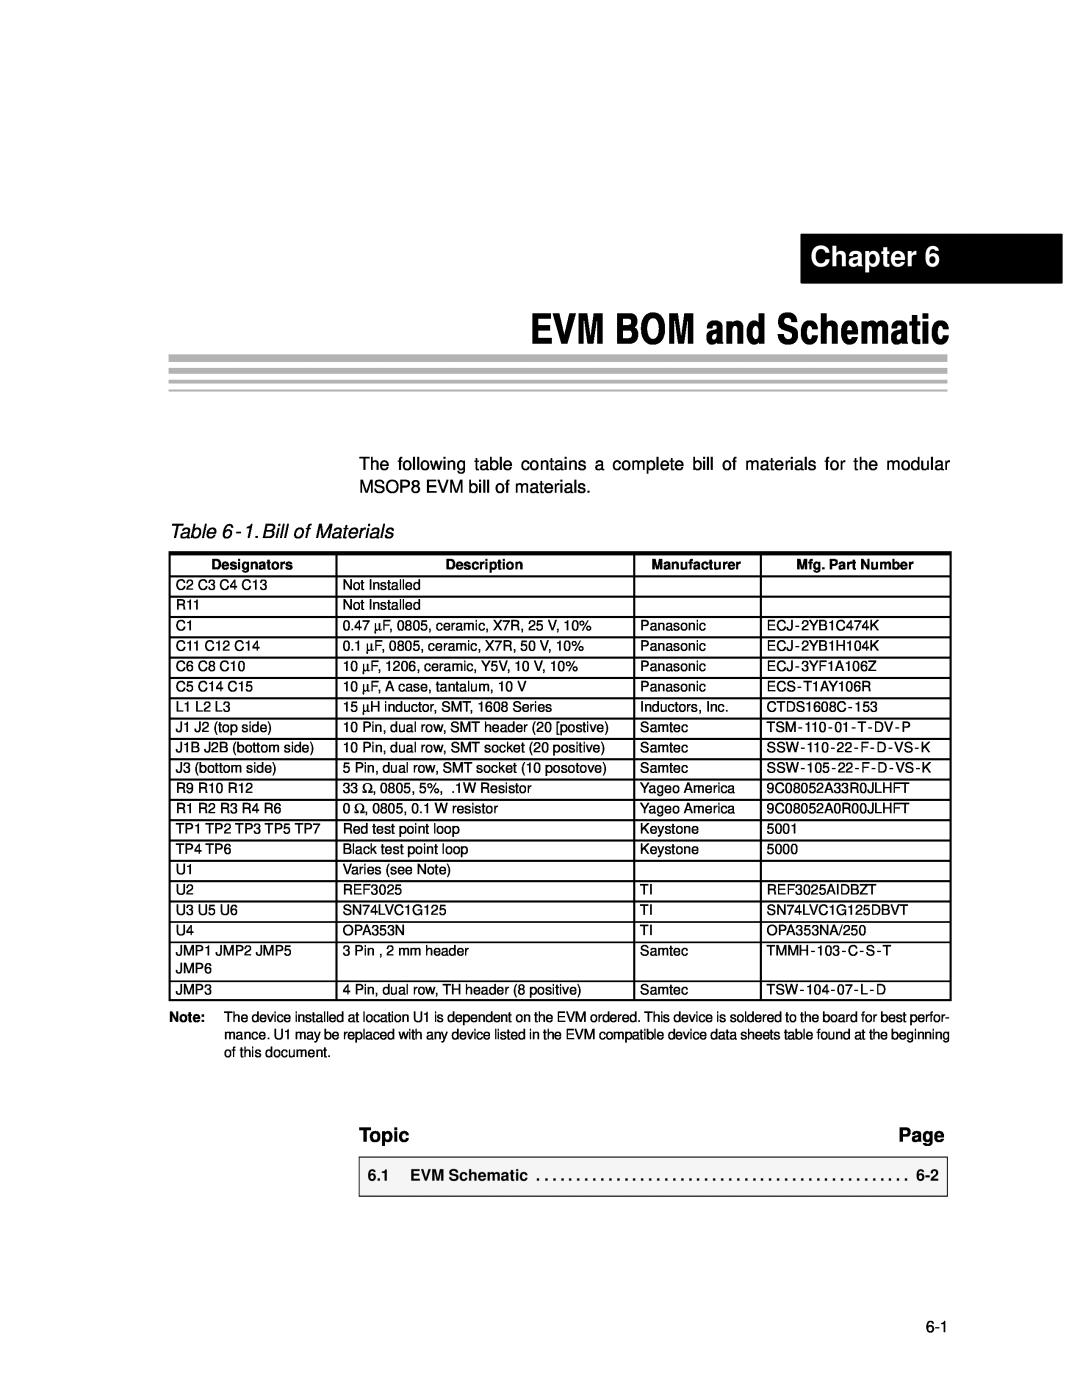 Texas Instruments MSOP8 EVM BOM and Schematic, 1. Bill of Materials, Topic, Page, Chapter, EVM Schematic, Designators 